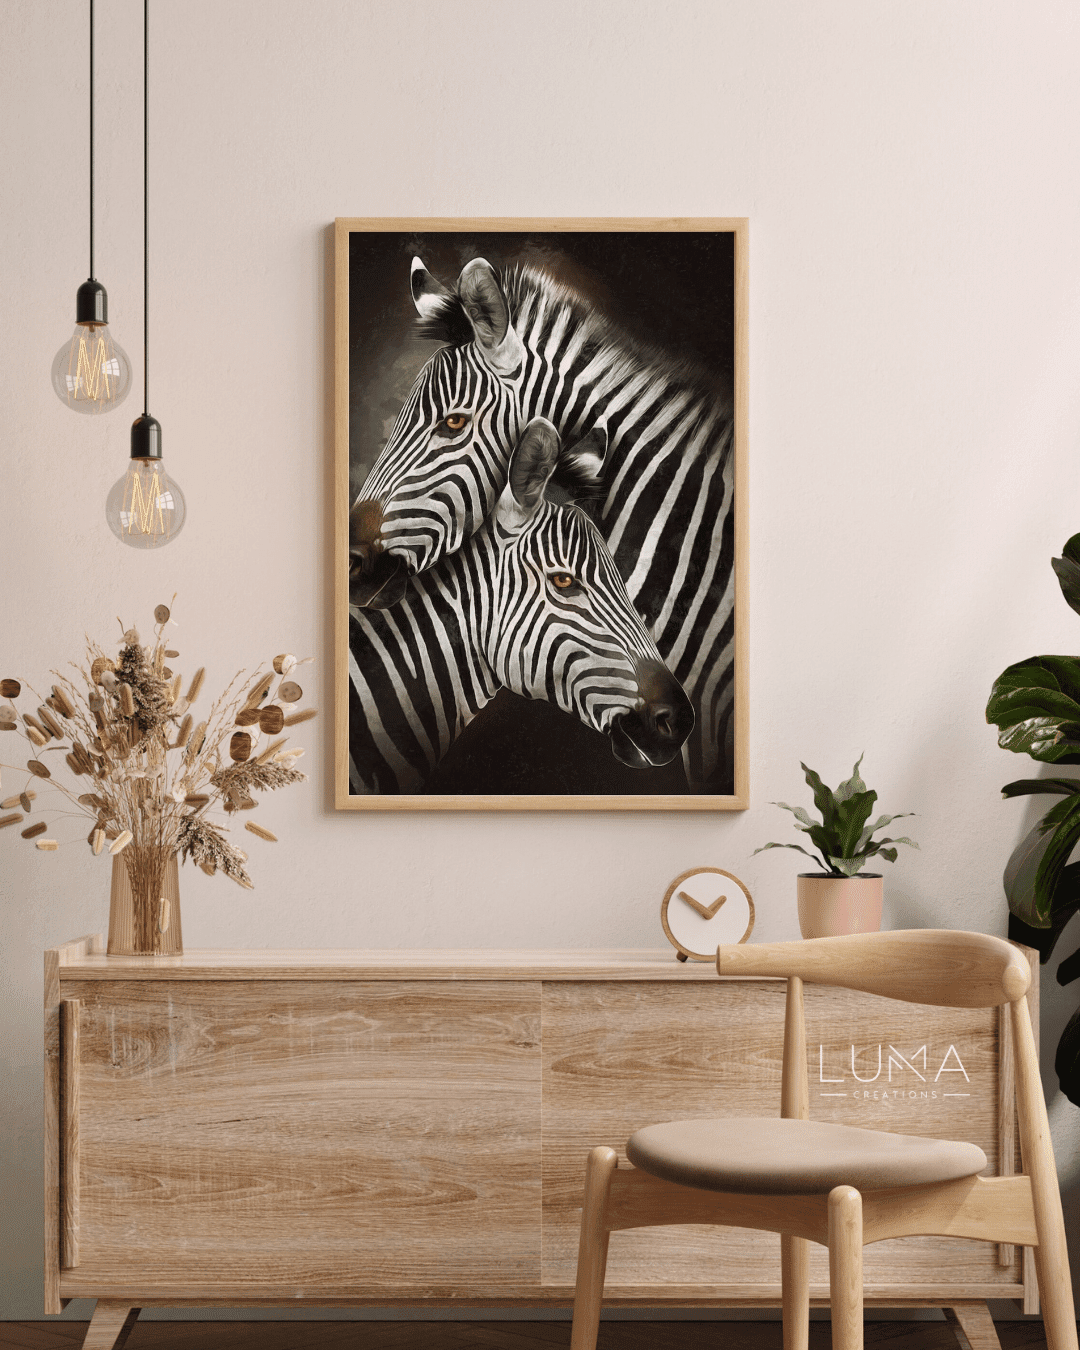 Romancing Zebra's Animal Artwork